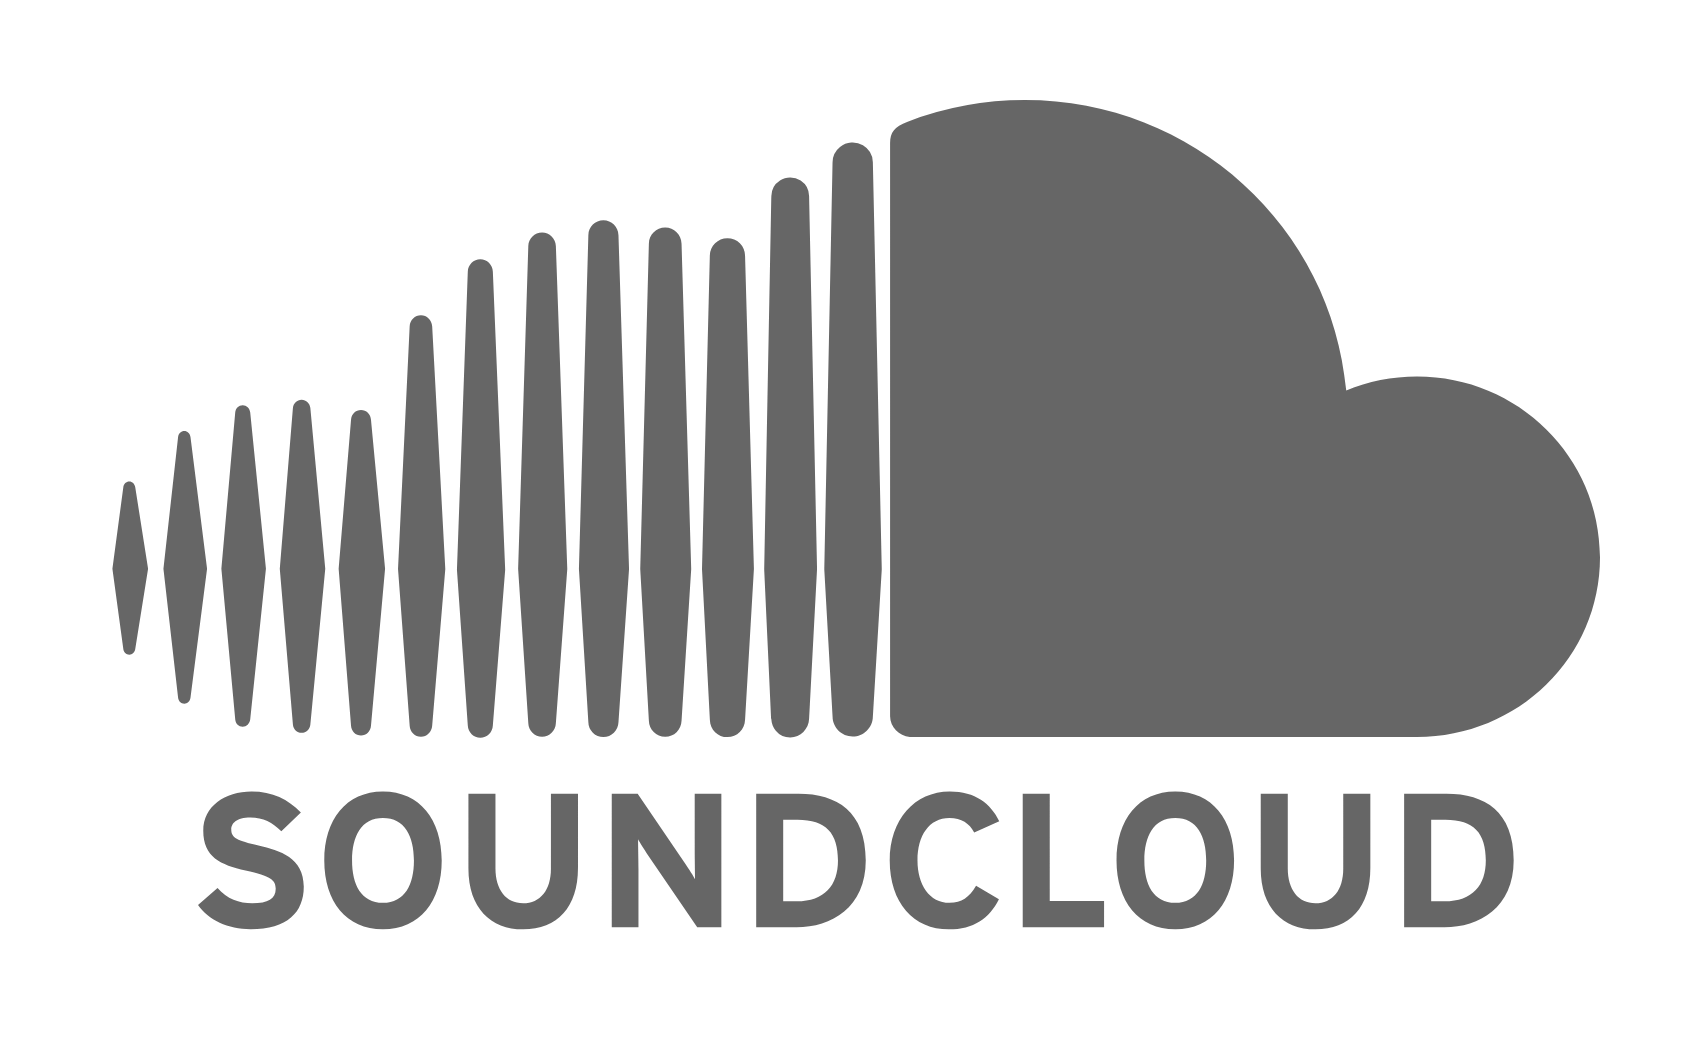 Download SoundCloud Black Logo PNG and Vector (PDF, SVG, Ai, EPS) Free